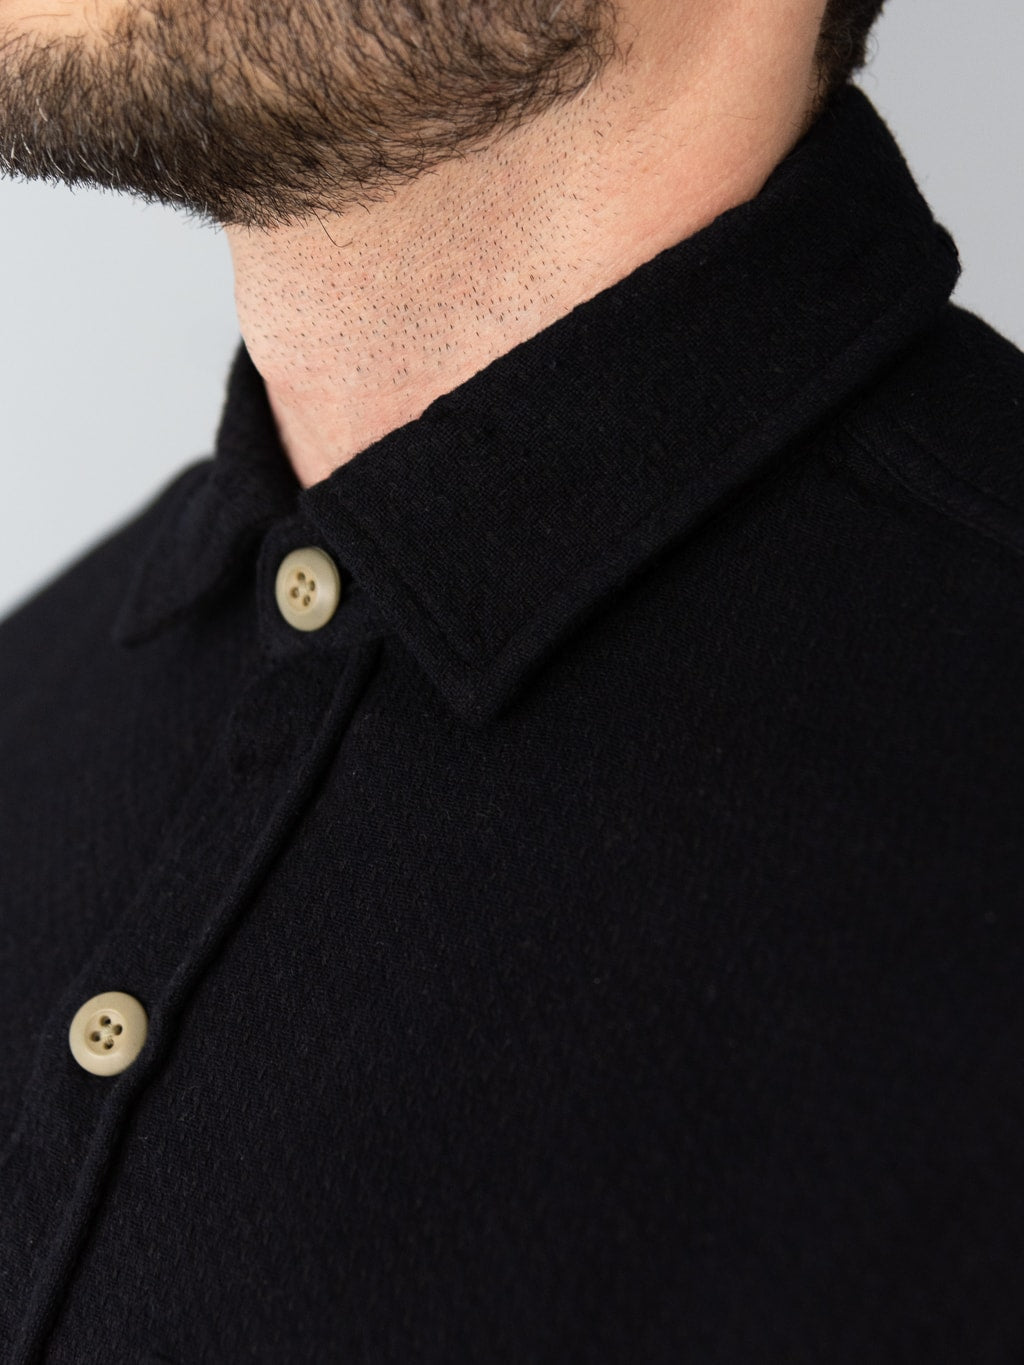 3sixteen CPO Shirt black Sashiko collar closeup